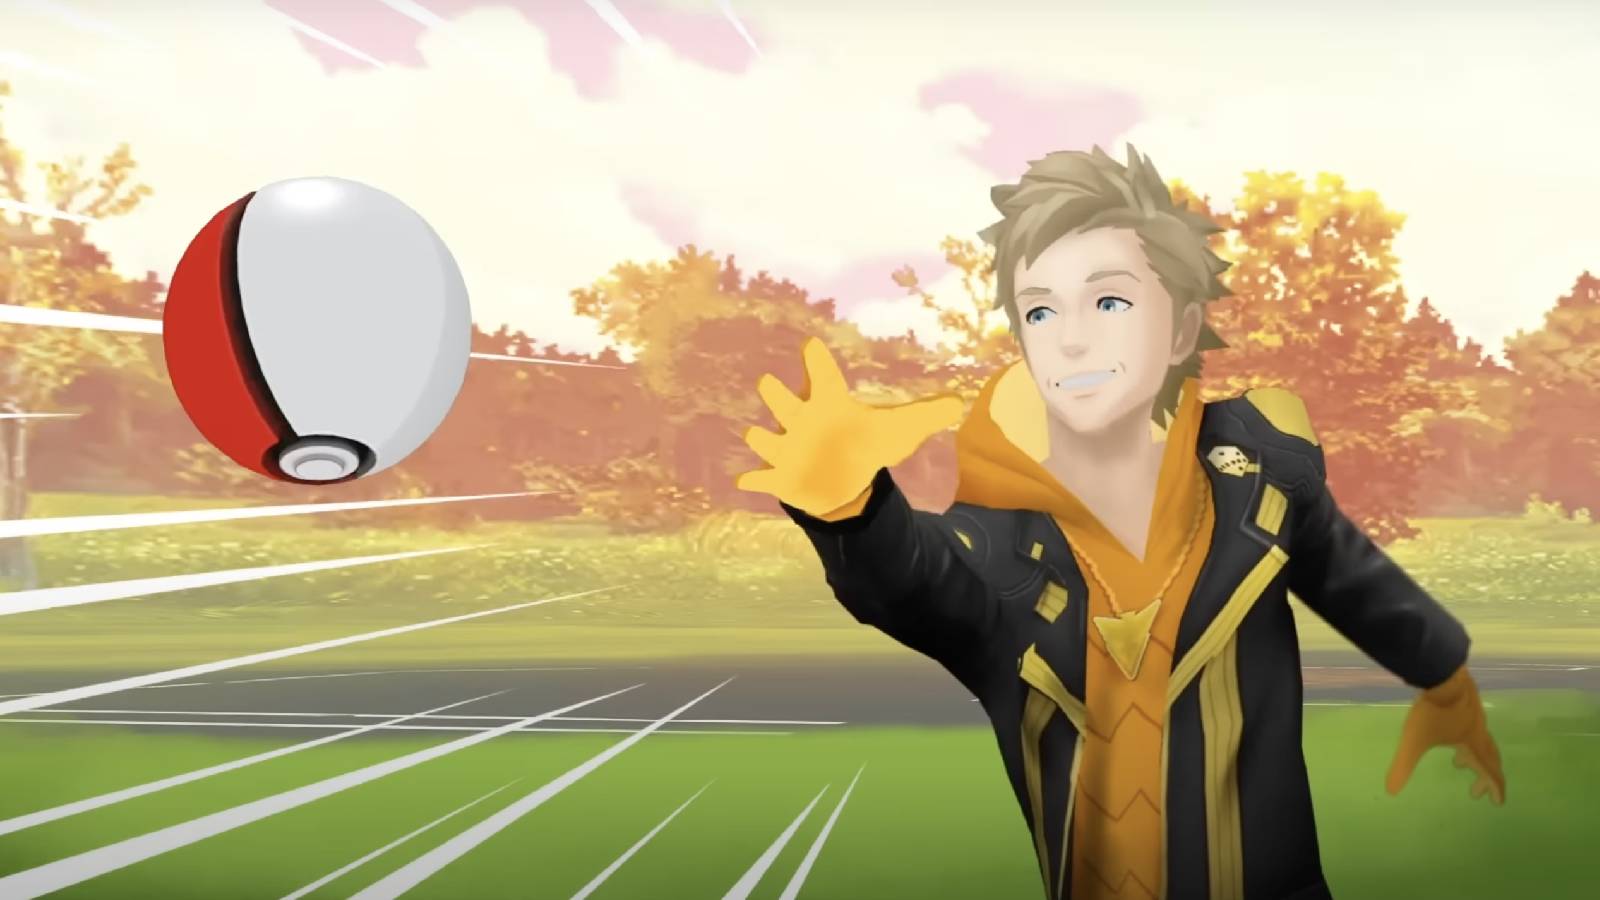 Key art shows a Pokemon Go character throwing a Poke Ball